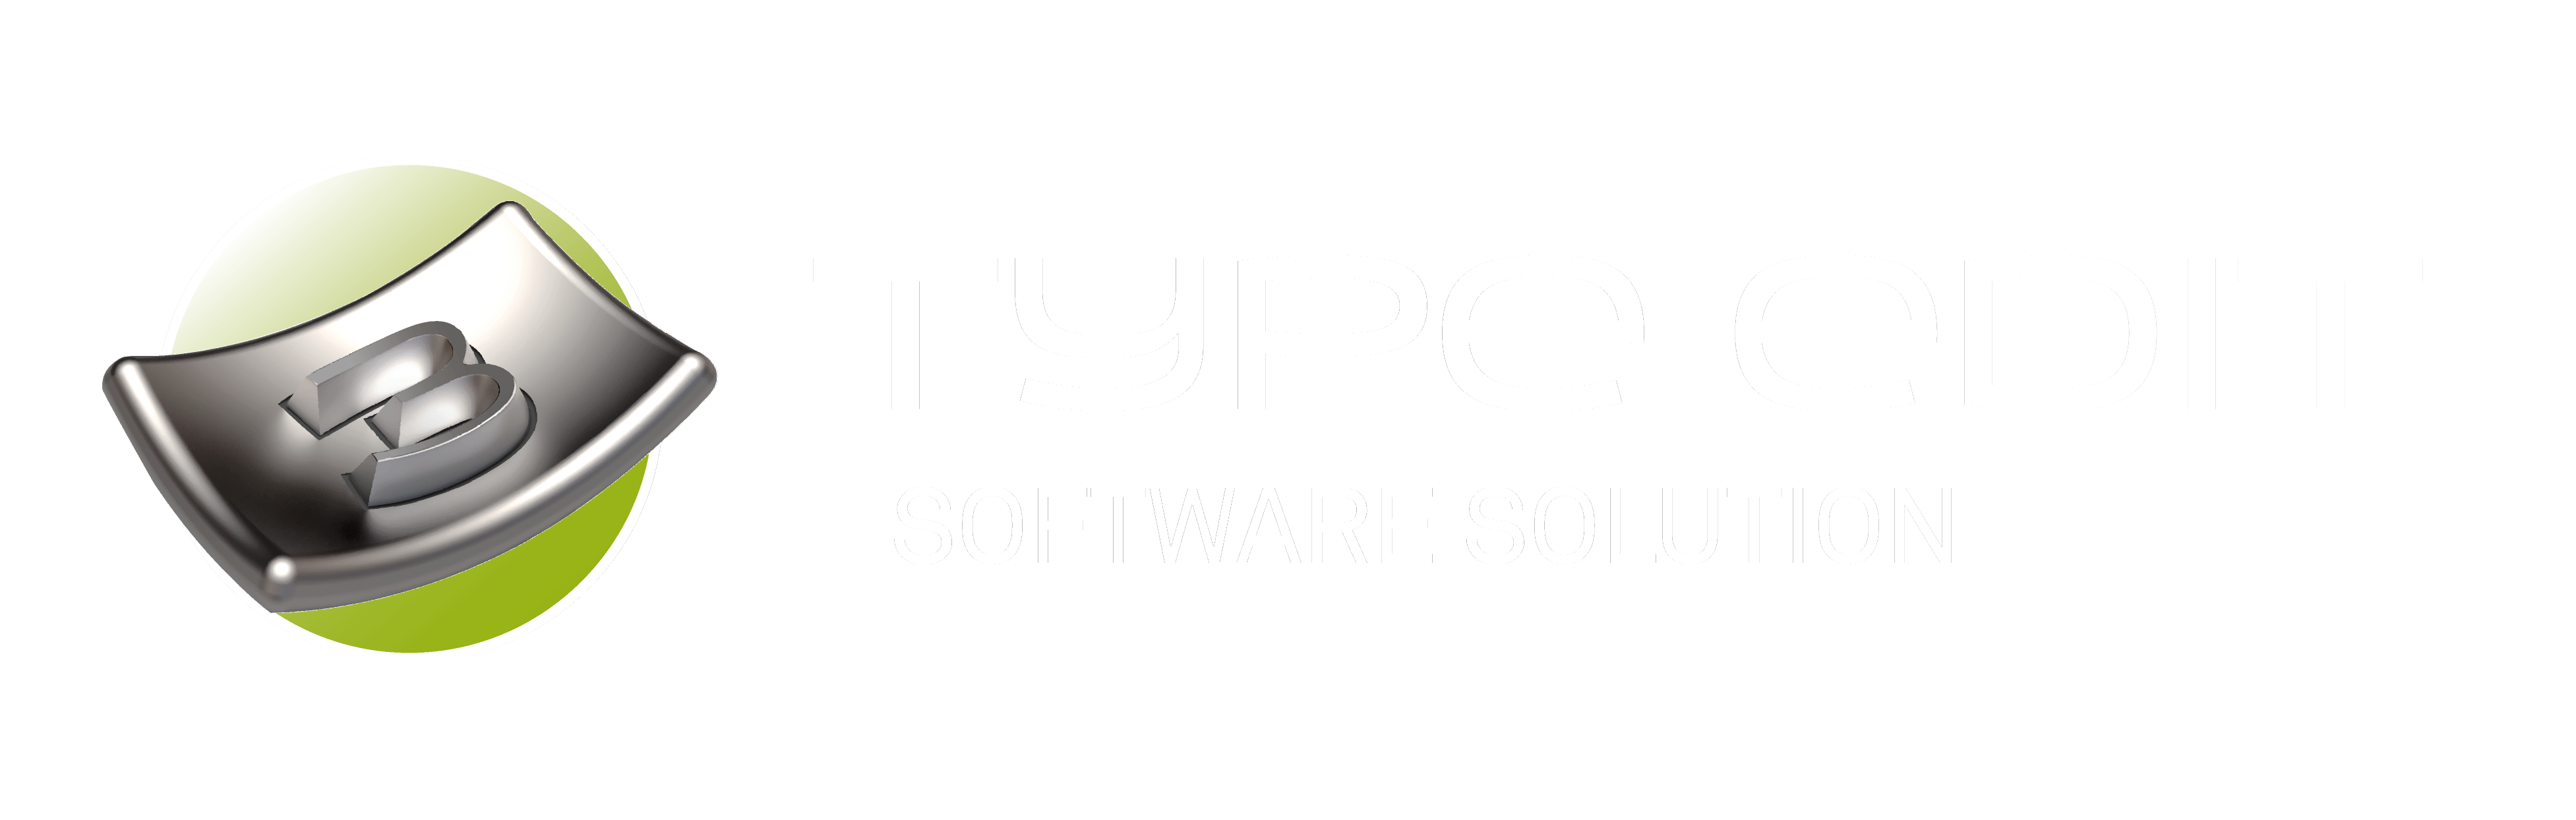 TypeEdit_logo_fondfonce